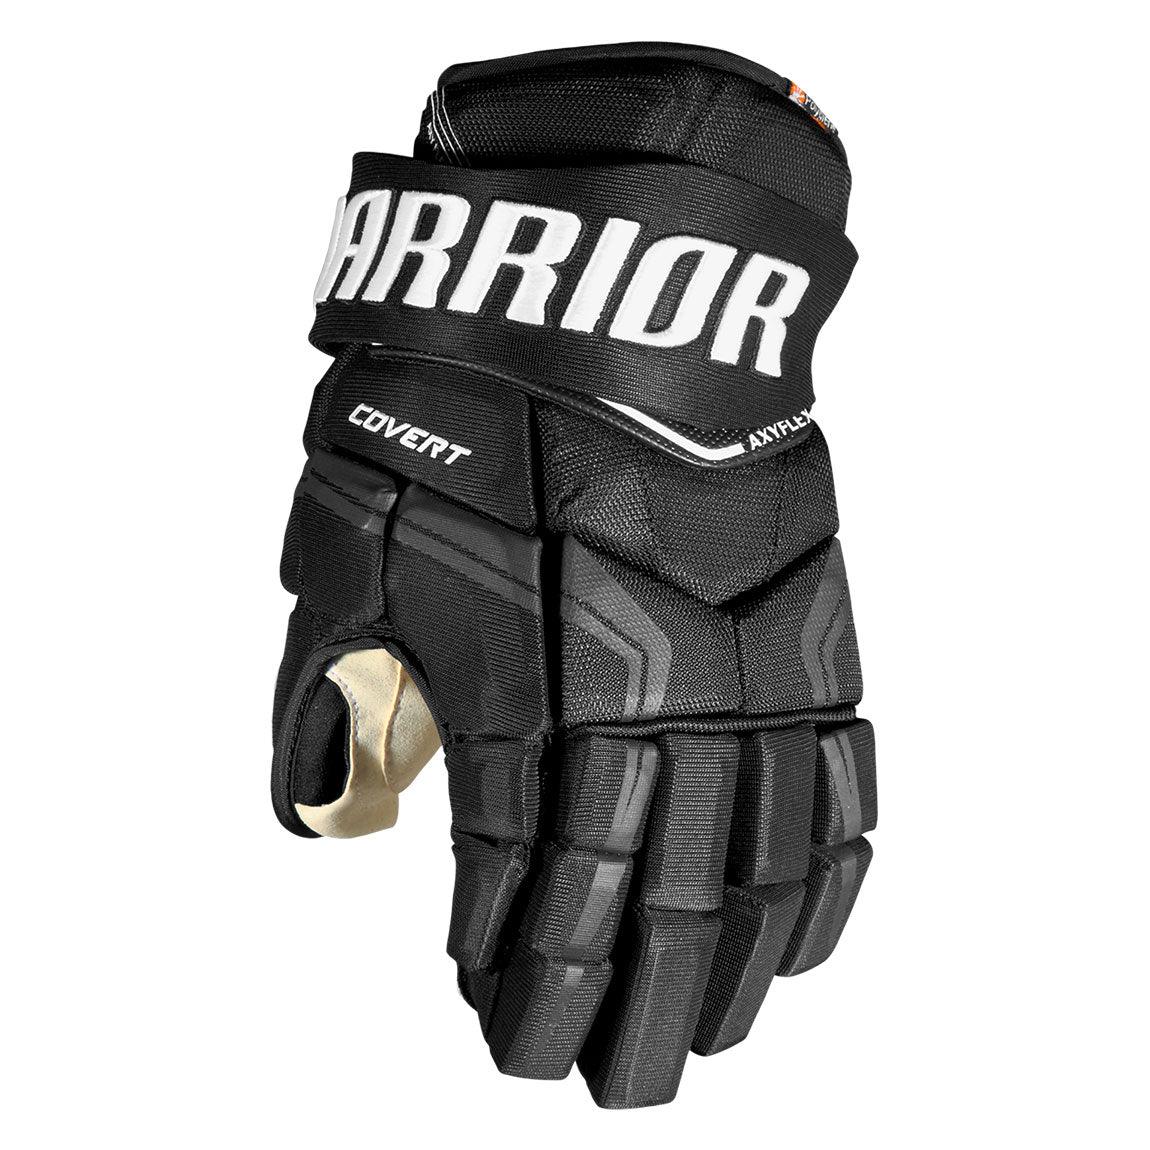 Covert QRE 3 Hockey Glove - Senior - Sports Excellence